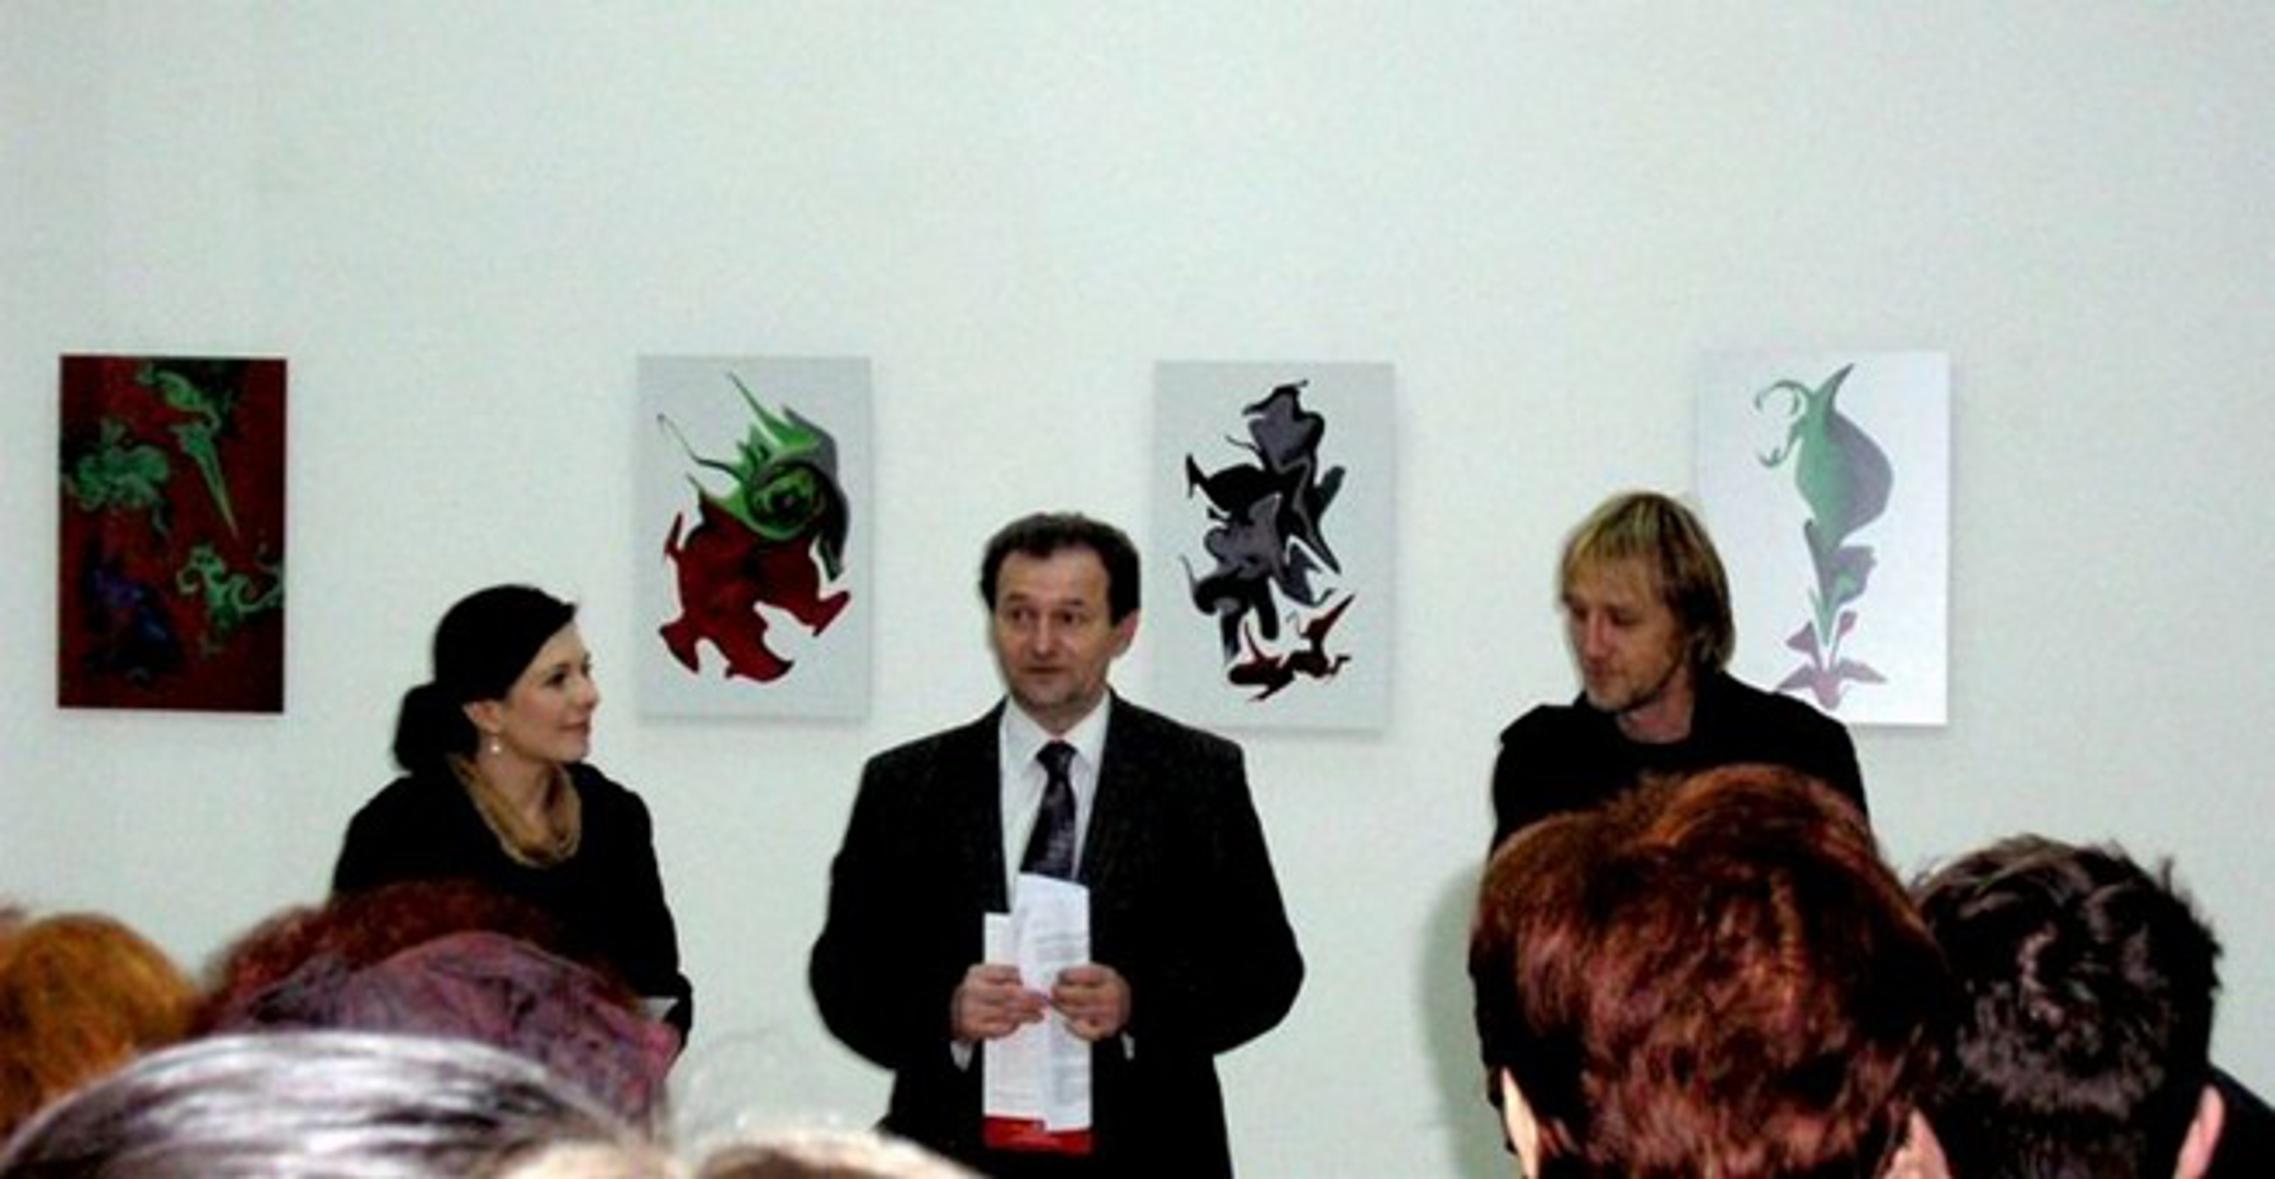 S otvaranja izložbe: Ilijana Vrbat Pejić, Branimir Pešut i Damir Hoyka